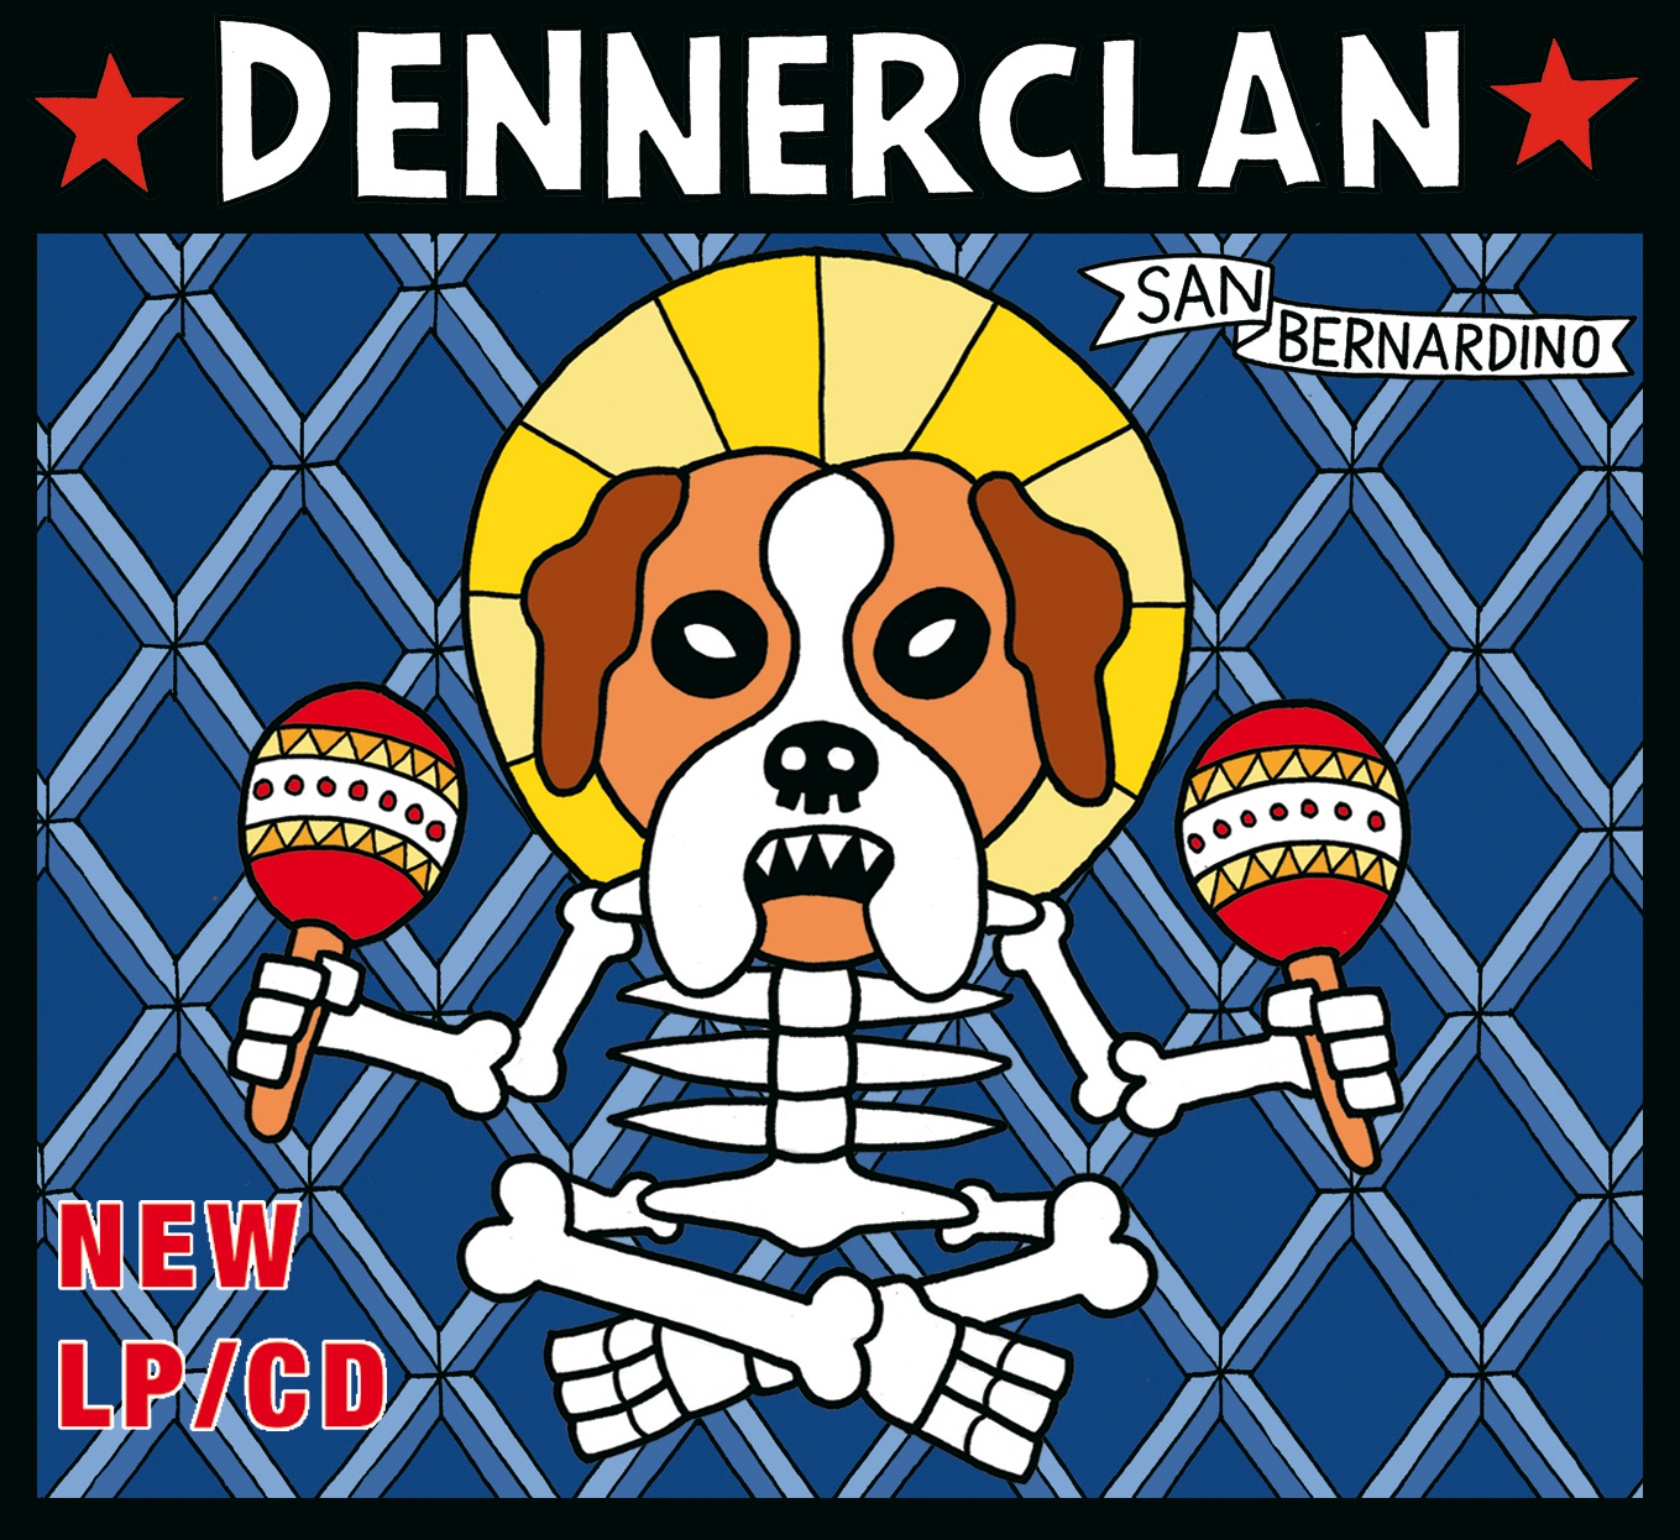 Dennerclan – San Bernardino (Cover)